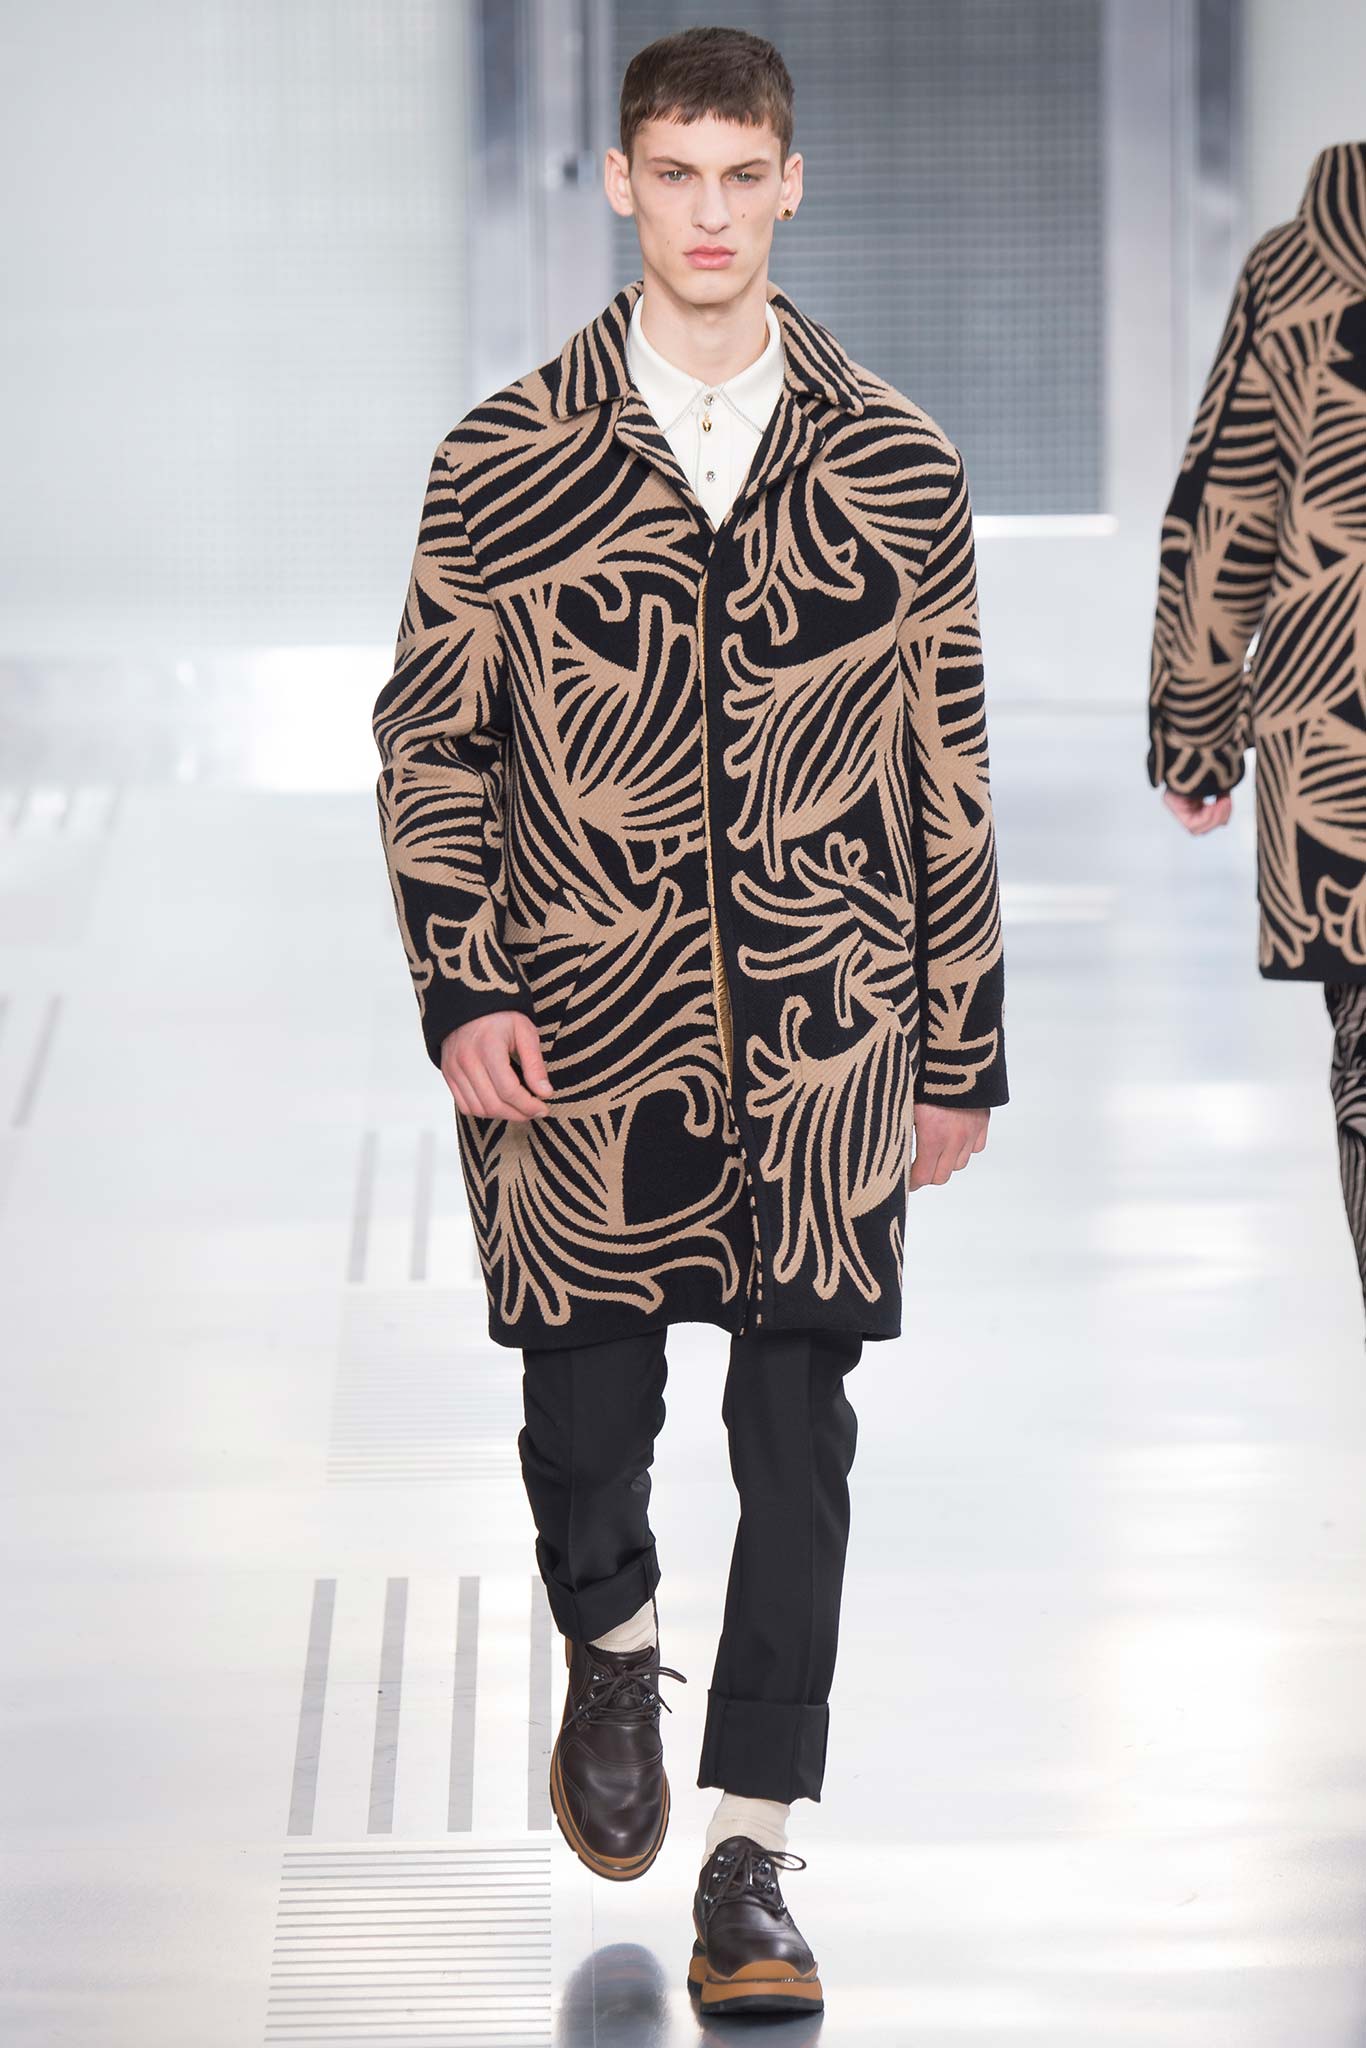 Louis Vuitton Menswear F/W 2015 Paris | GRAVERAVENS